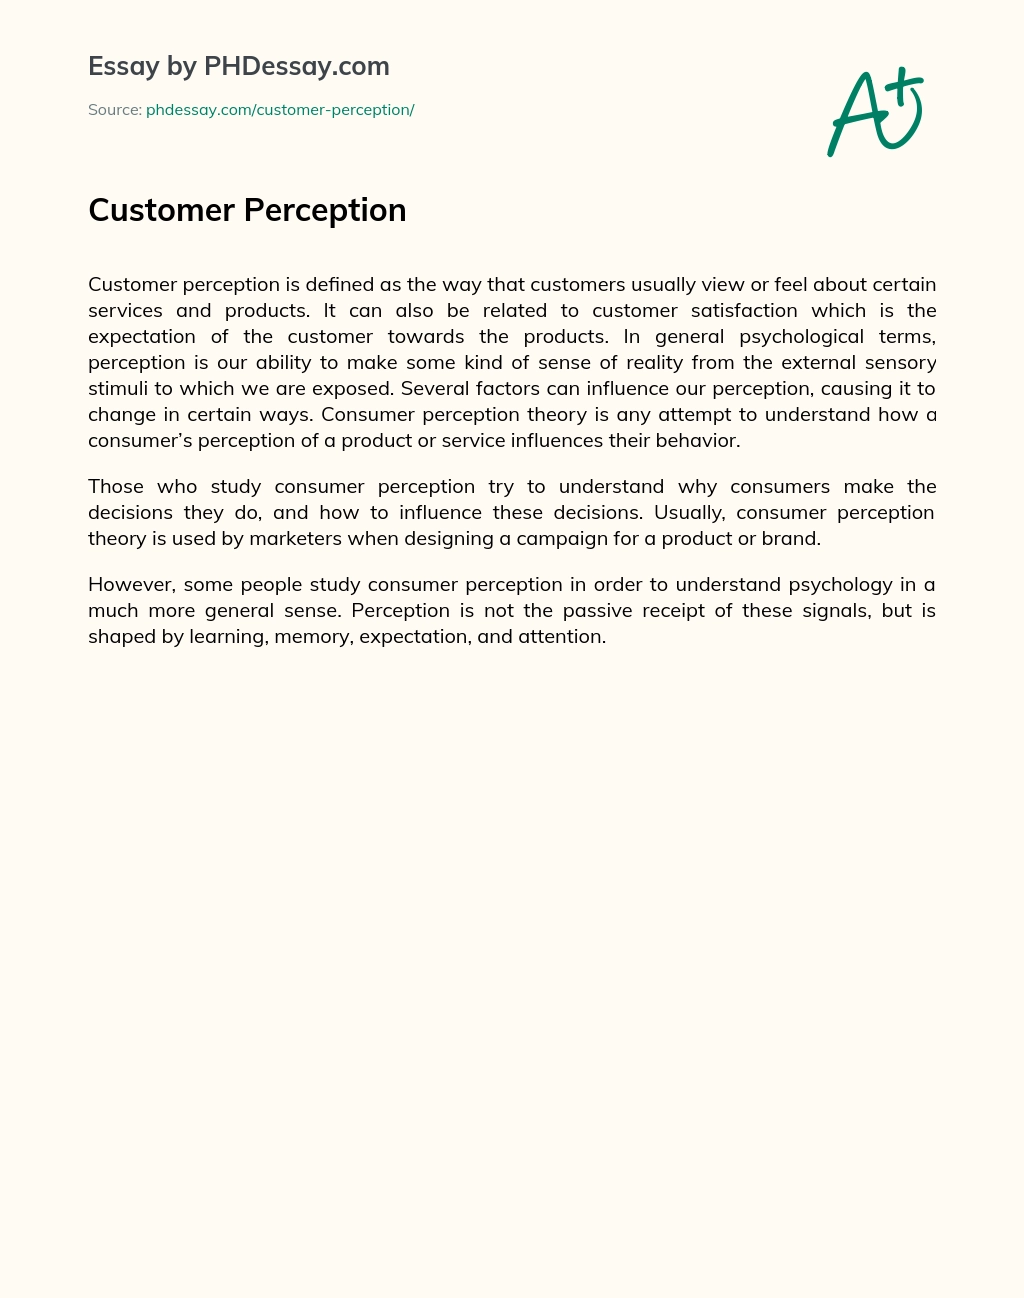 Customer Perception essay